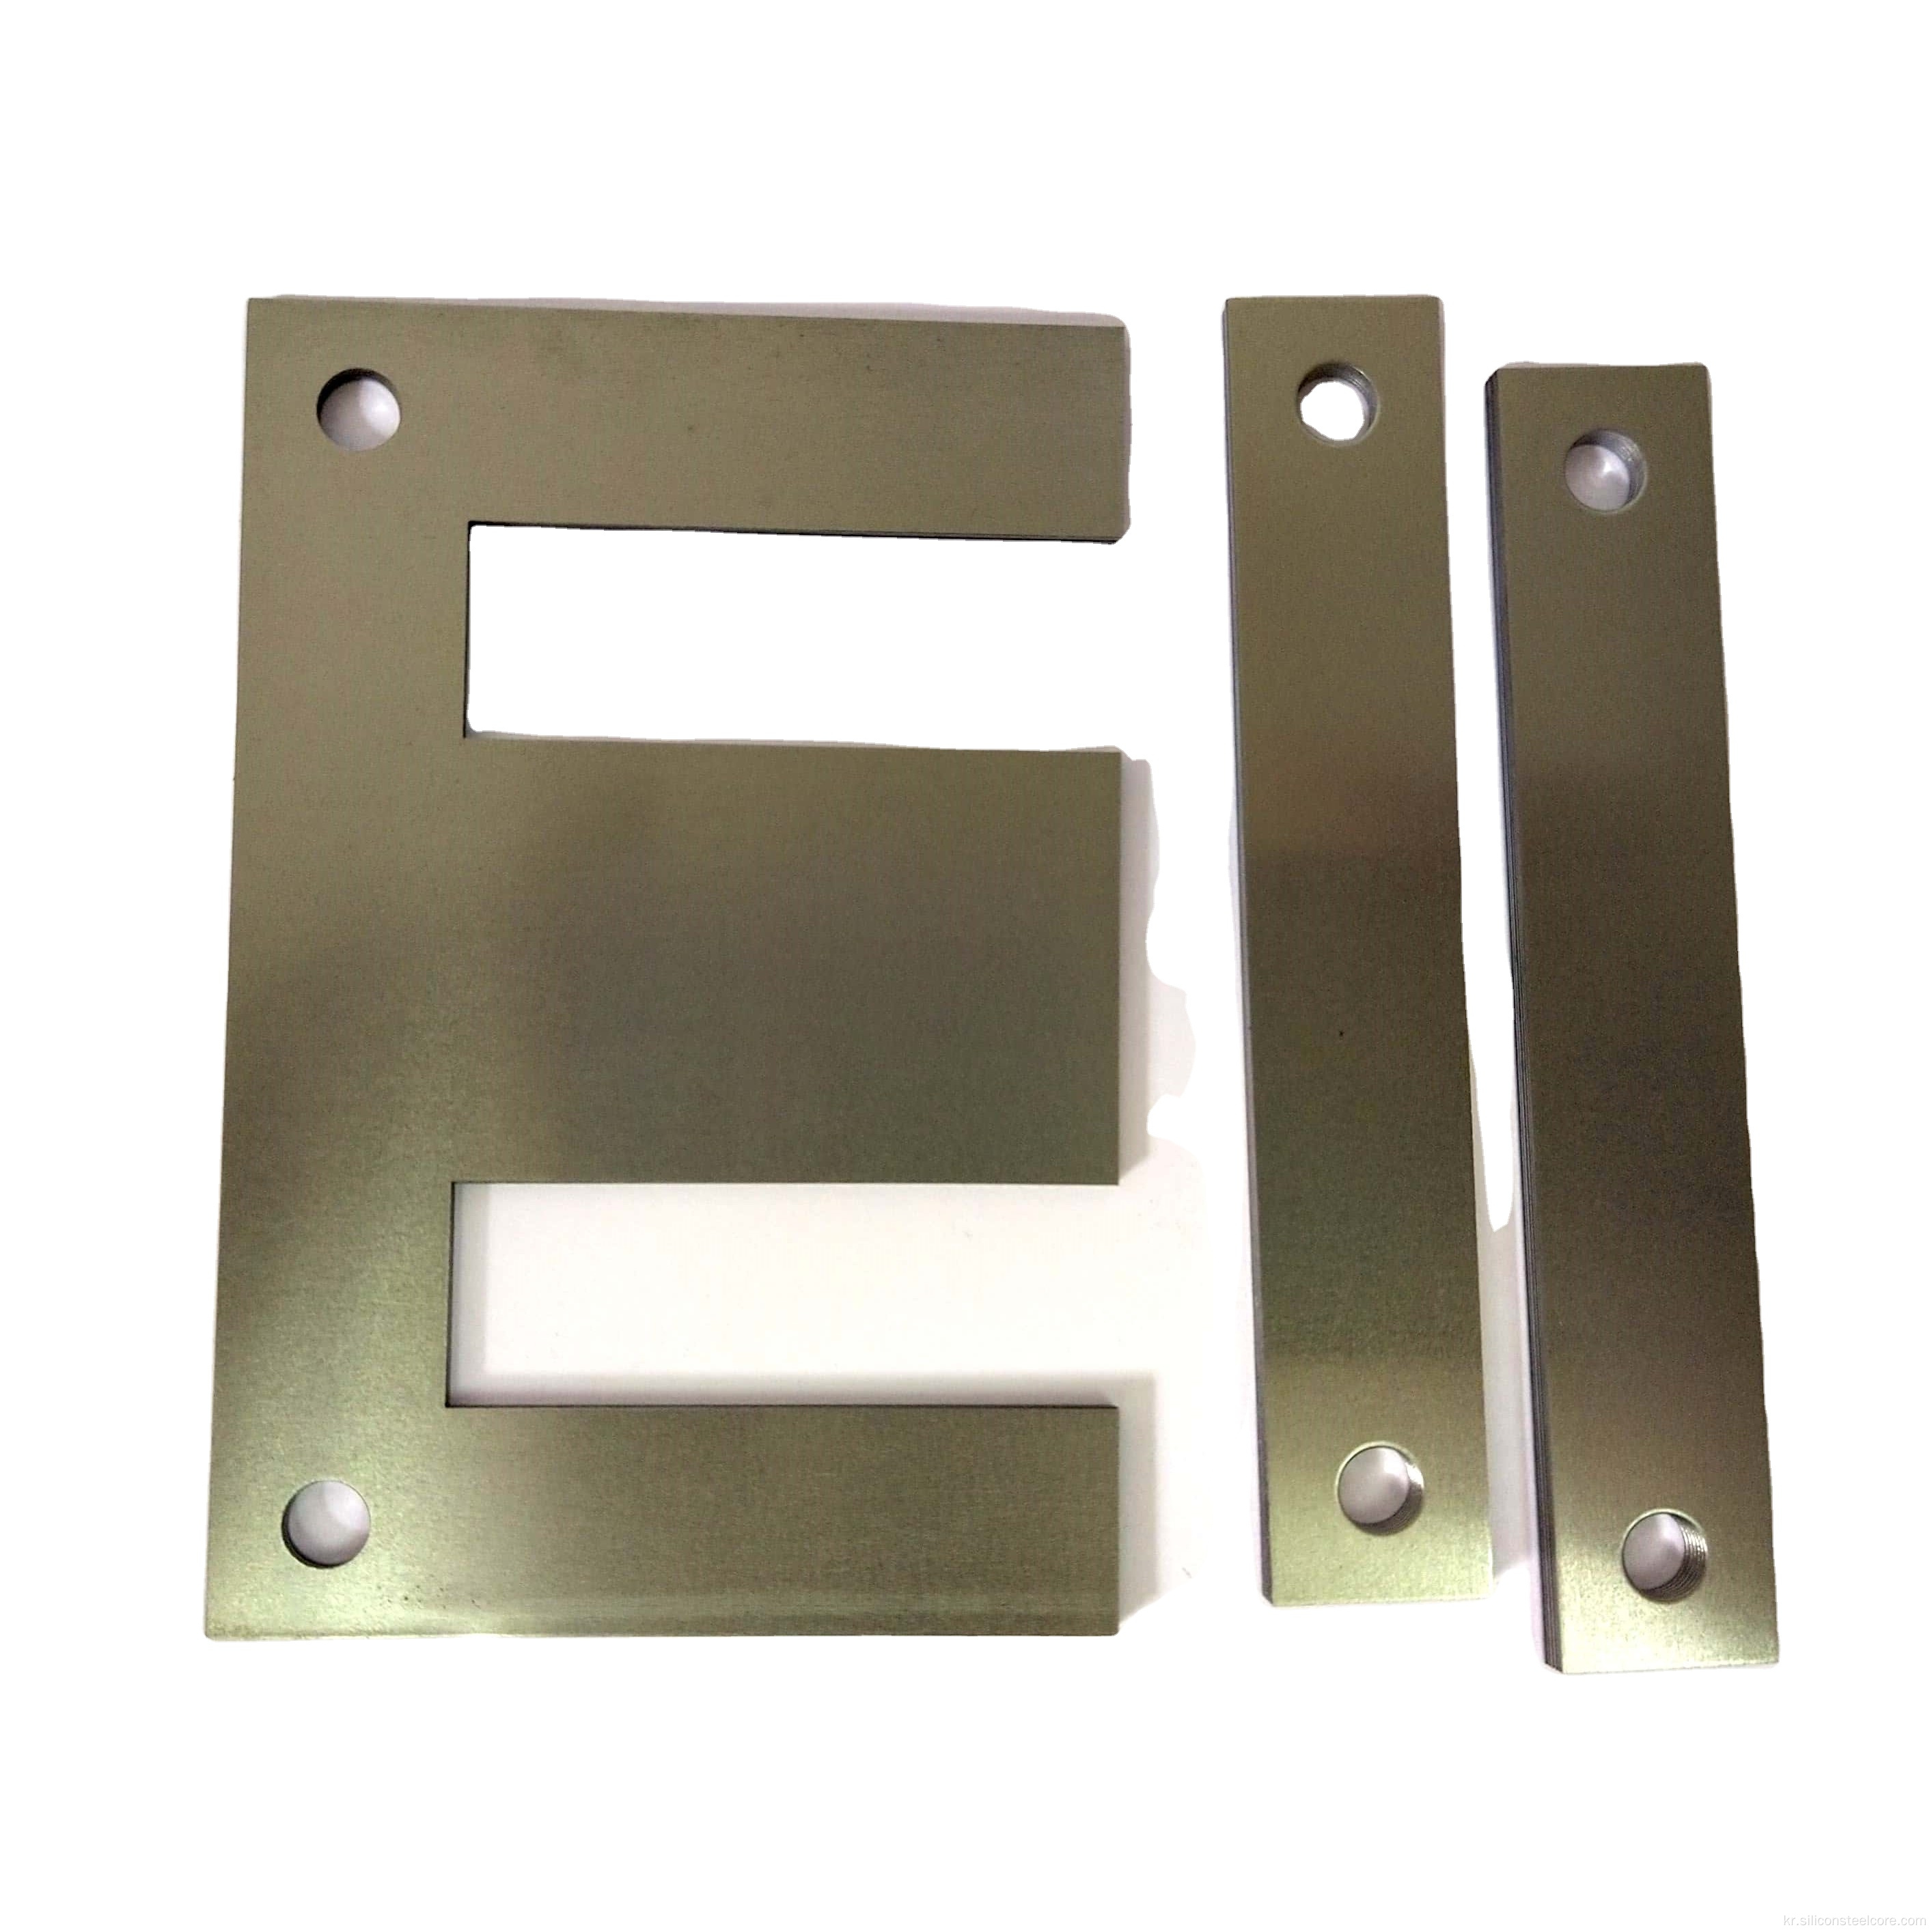 Chuangjia Factory Manufacture Silicon Electrical Steel Sheet EI 트랜스포머 코어 508Wei300 용 라미네이션